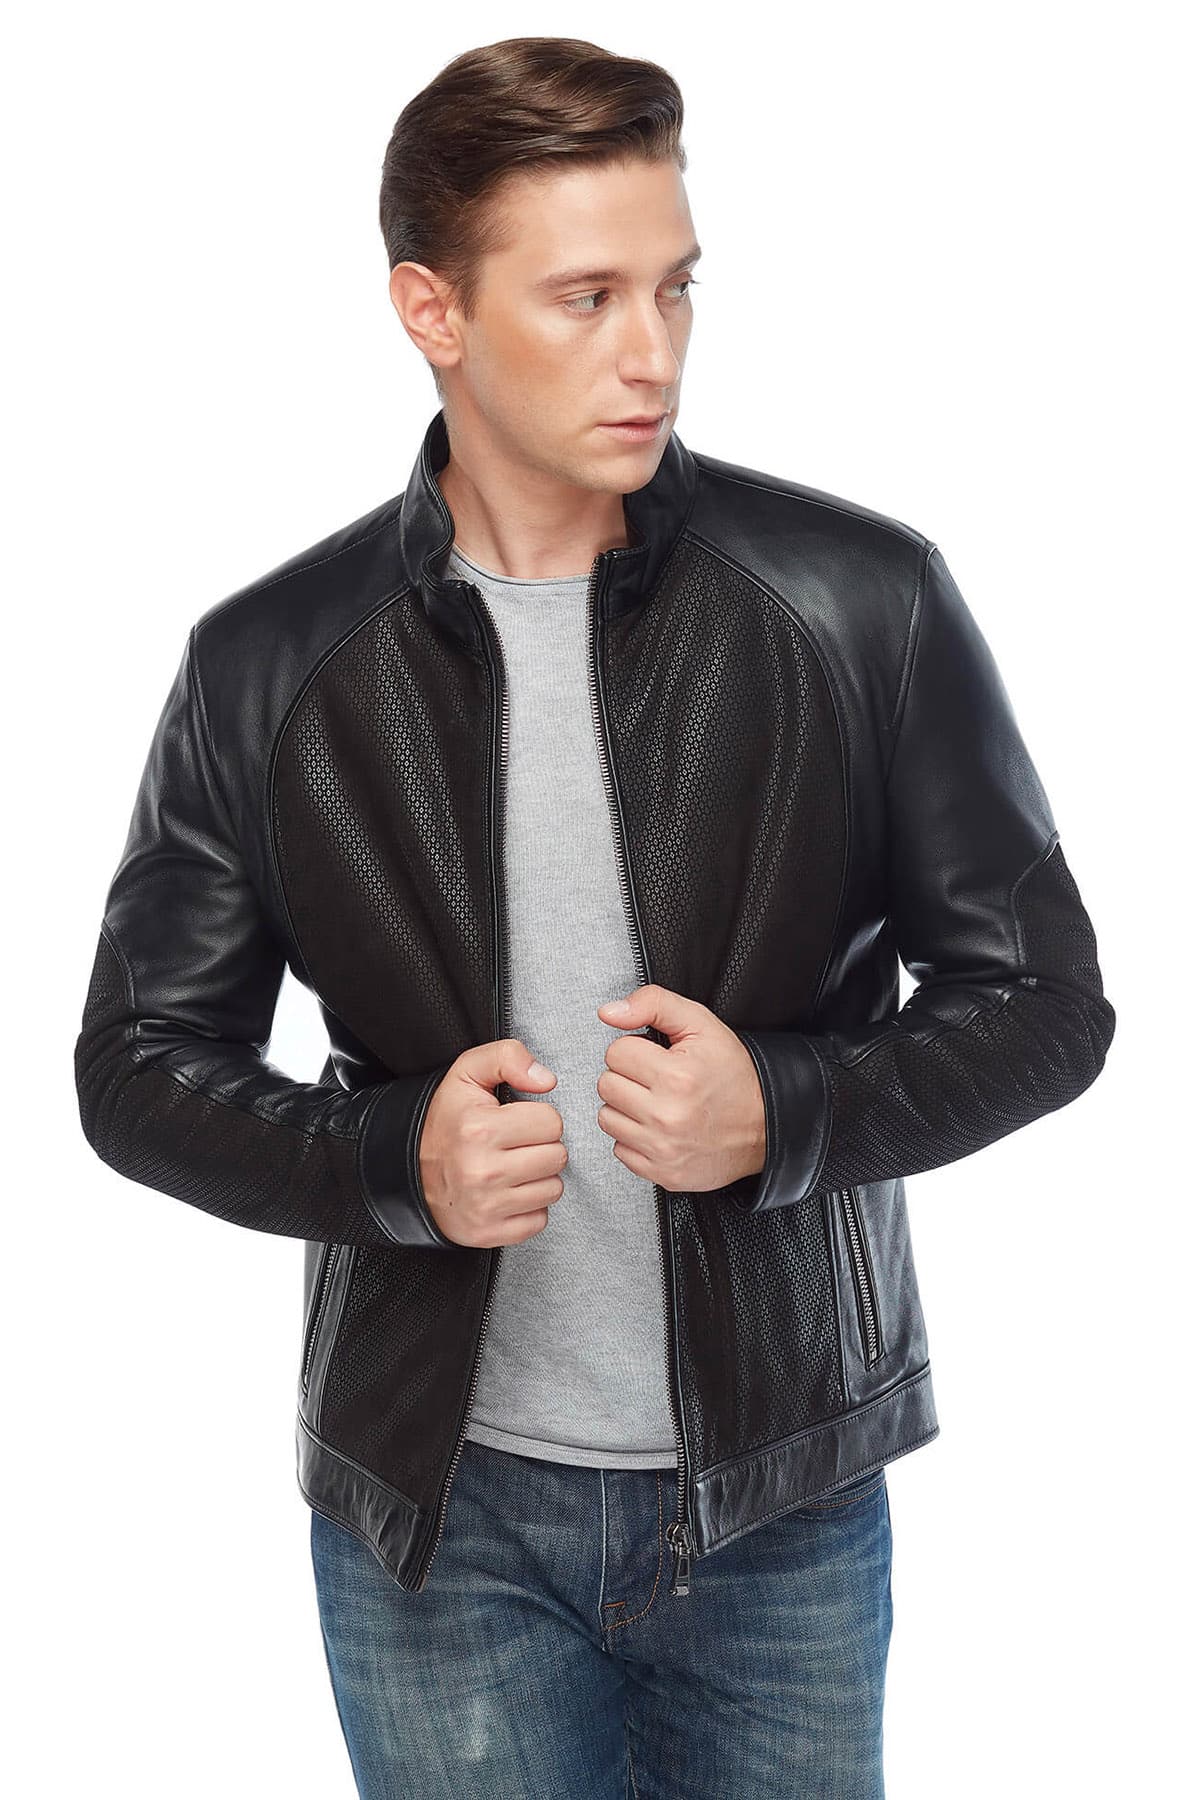 Patrick Genuine Suede Leather Coat in Black Pose